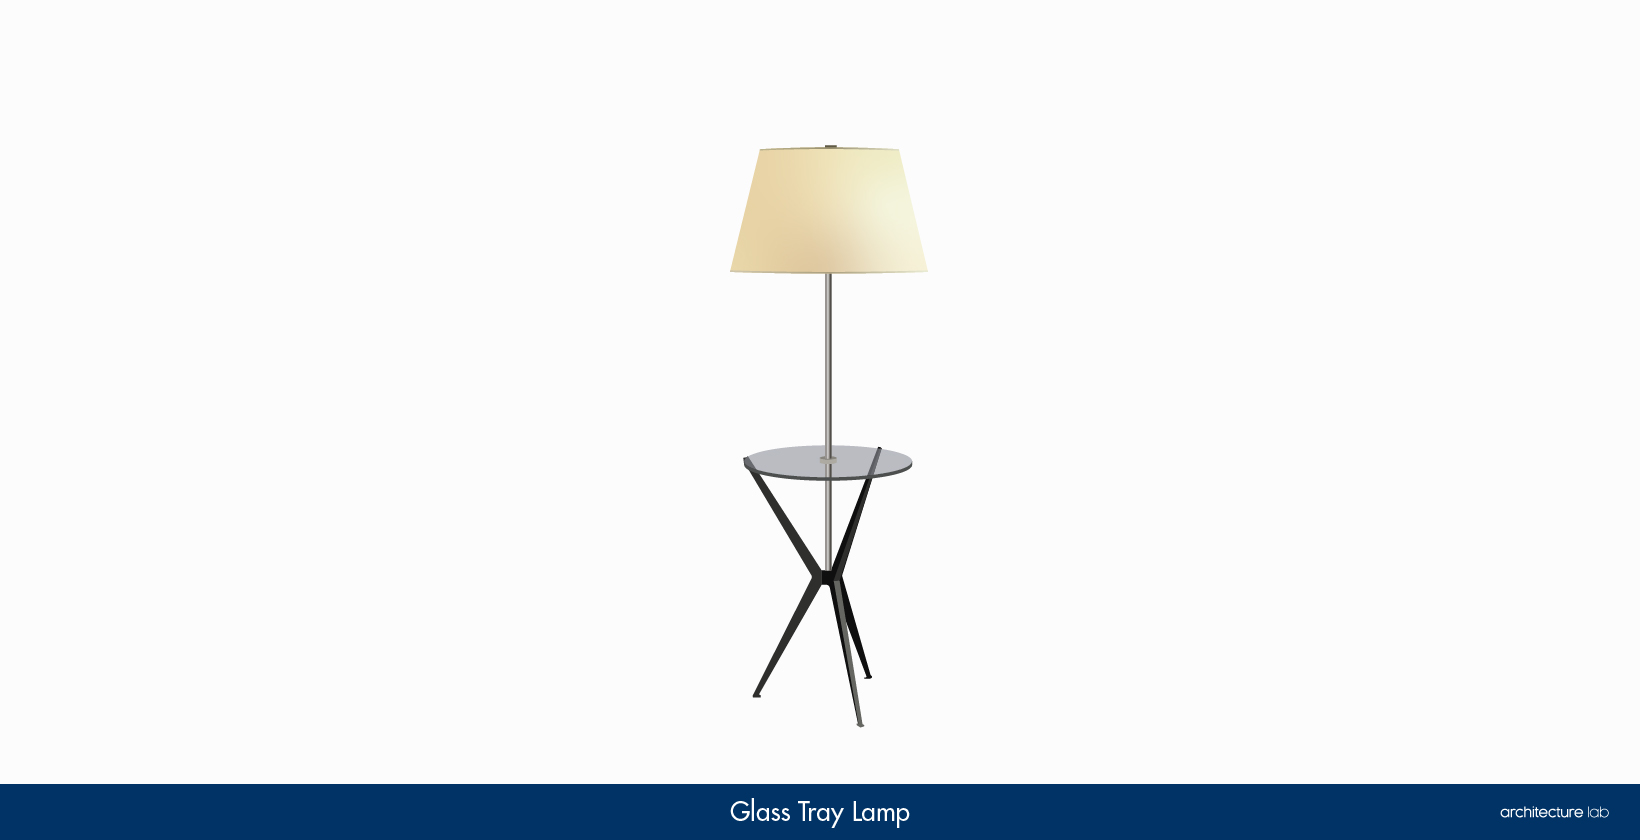 4. Glass tray lamp